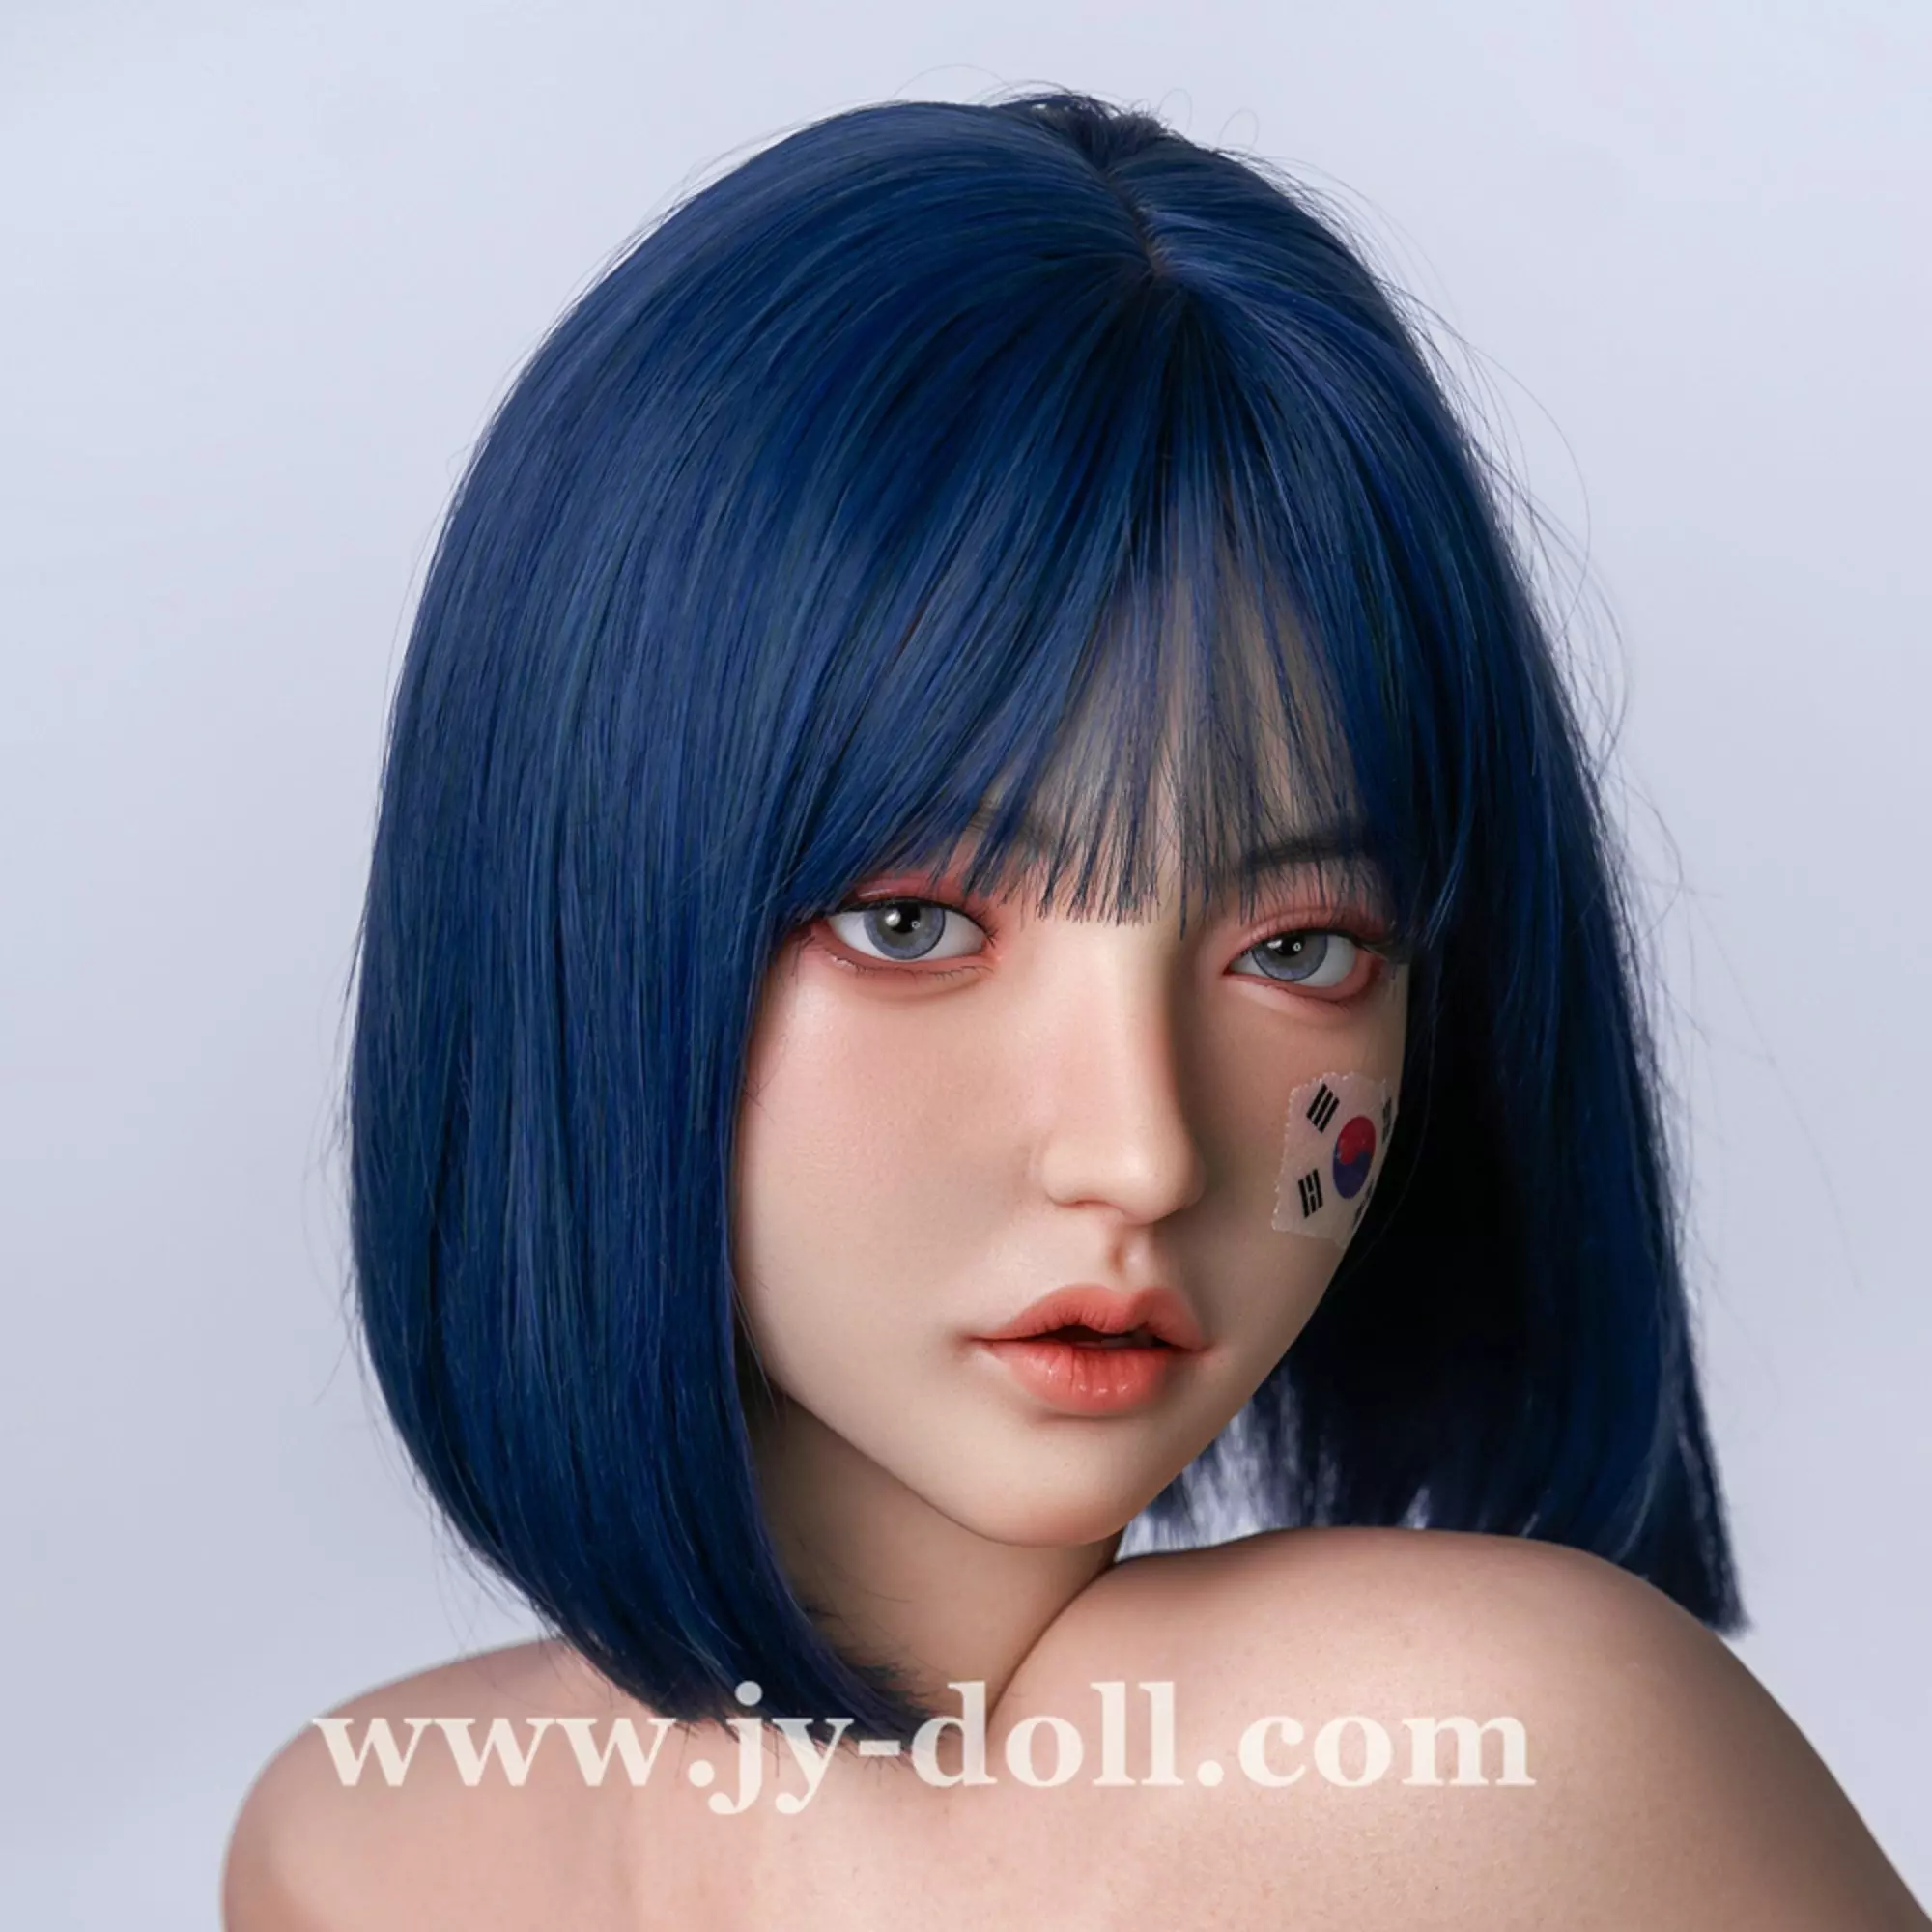 JY Doll silicone sex doll head Annai, removable jaw